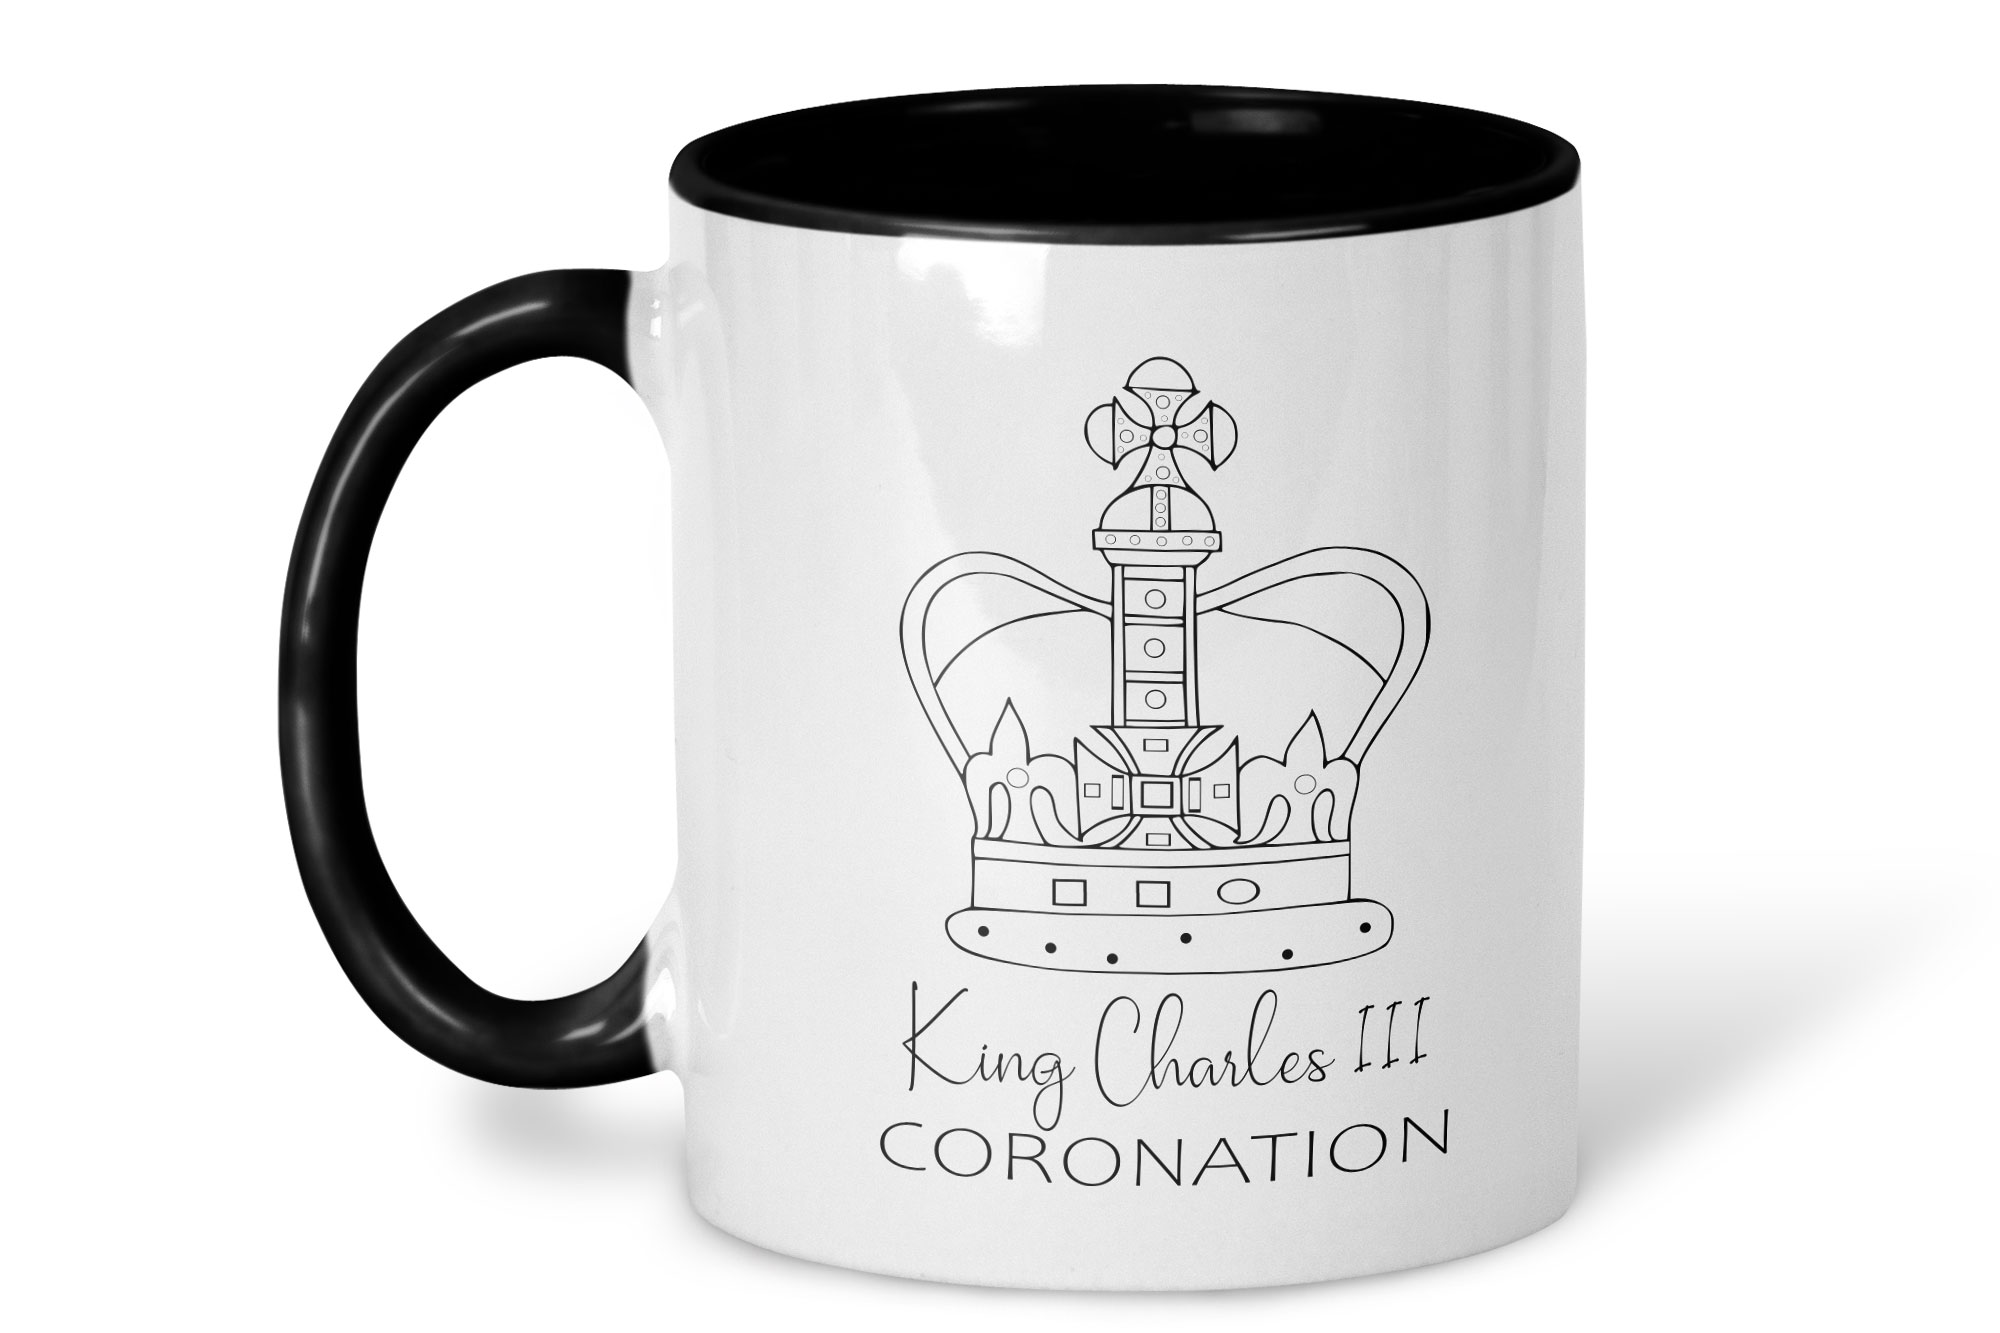 King Charles III Coronation Black & White Mug